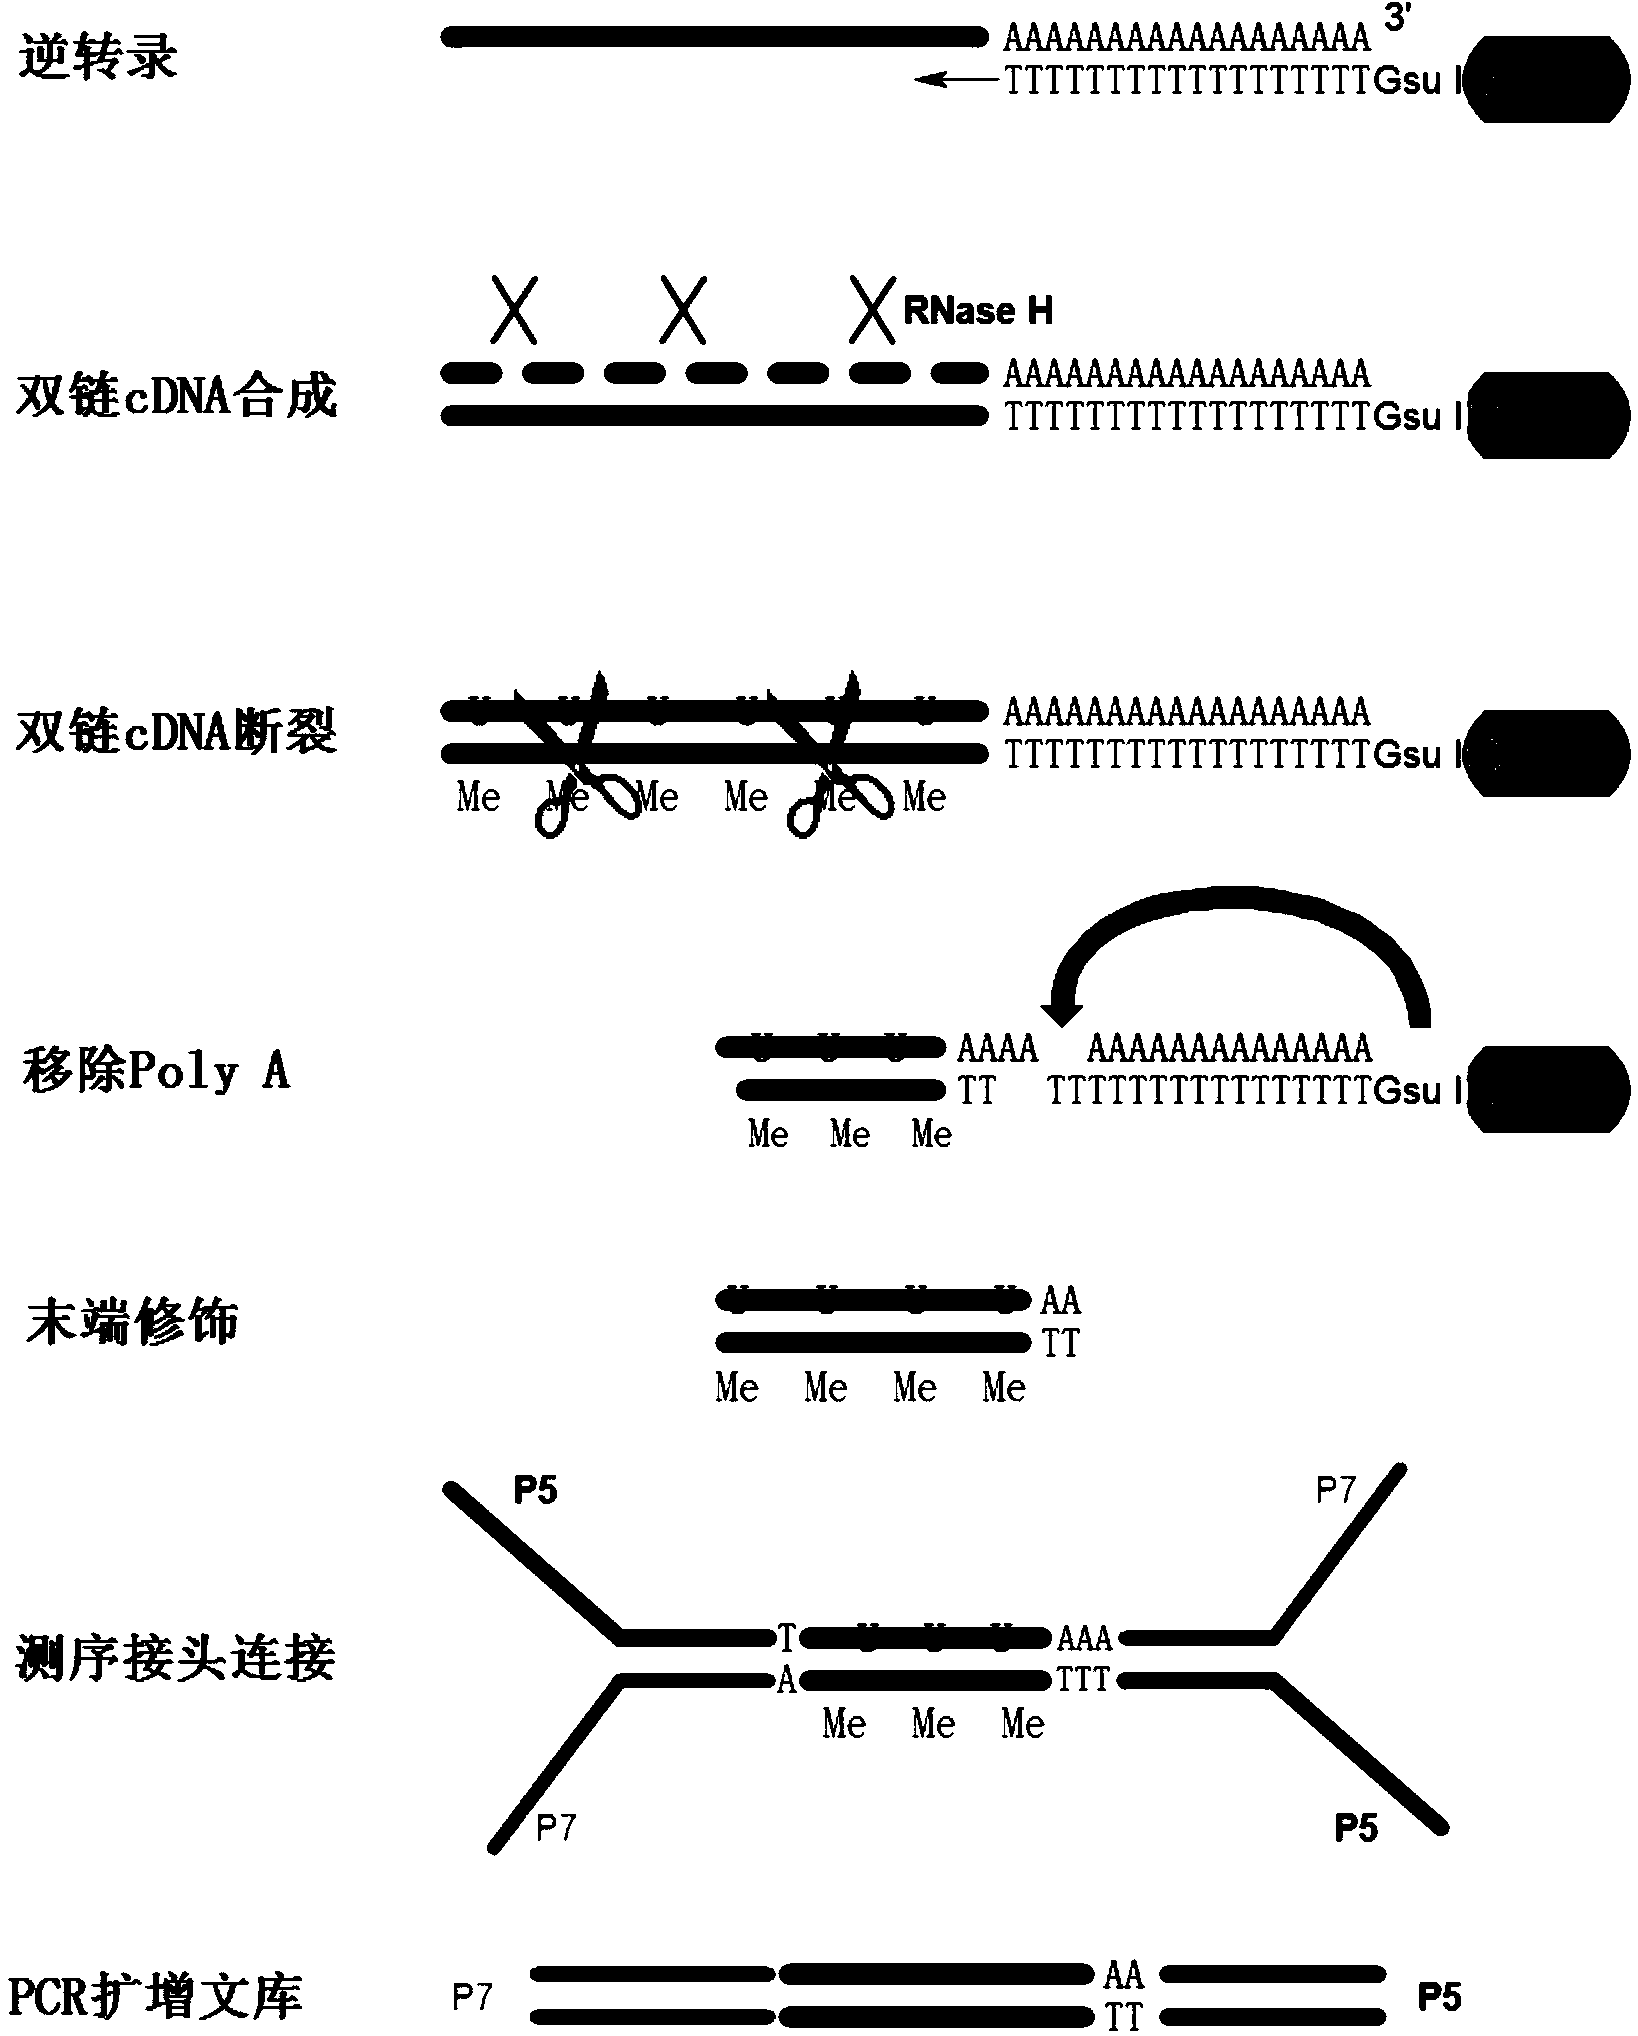 Method for analyzing APA (Alternative Polyadenylation) based on 3T-seq (TT-mRNA Terminal Sequencing) within whole-genome range